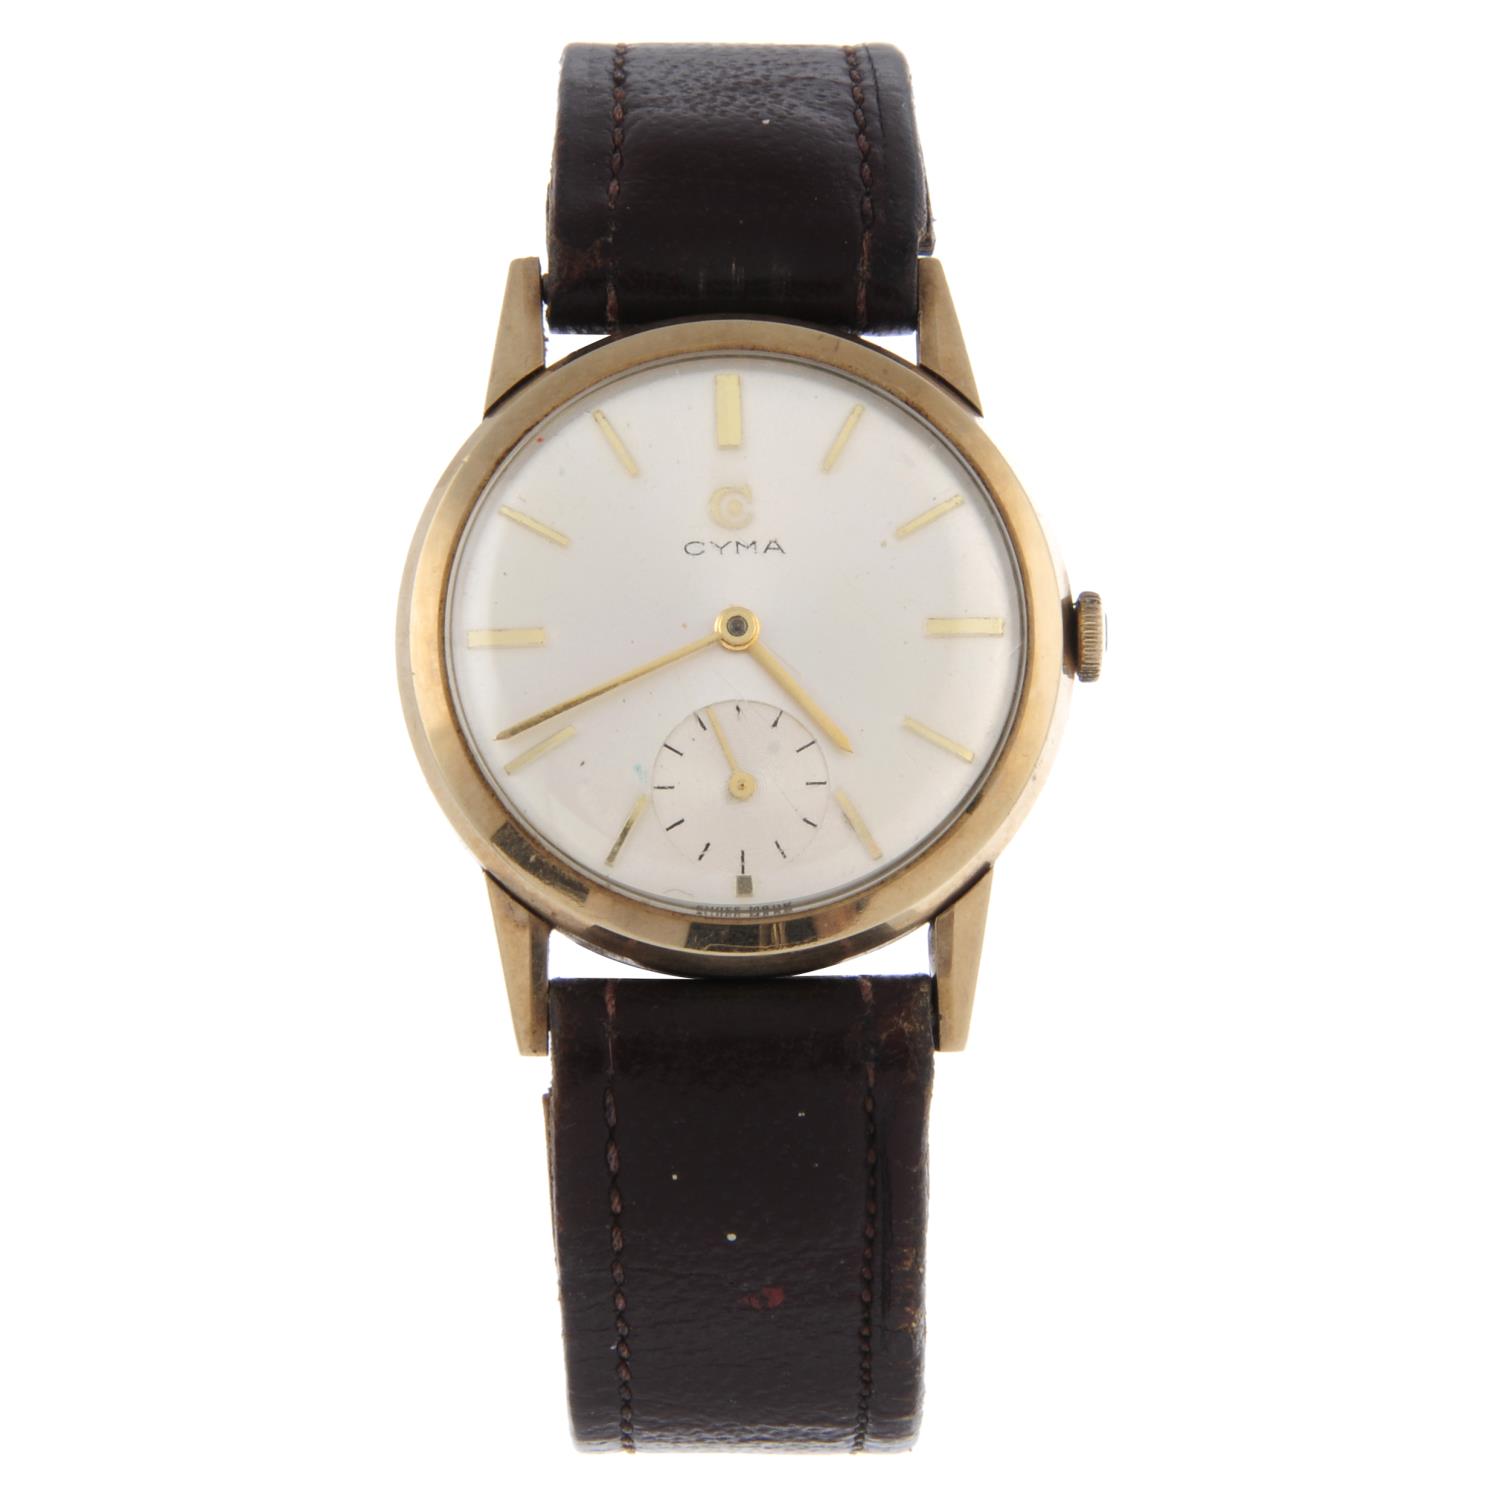 CYMA - a gentleman's wrist watch.